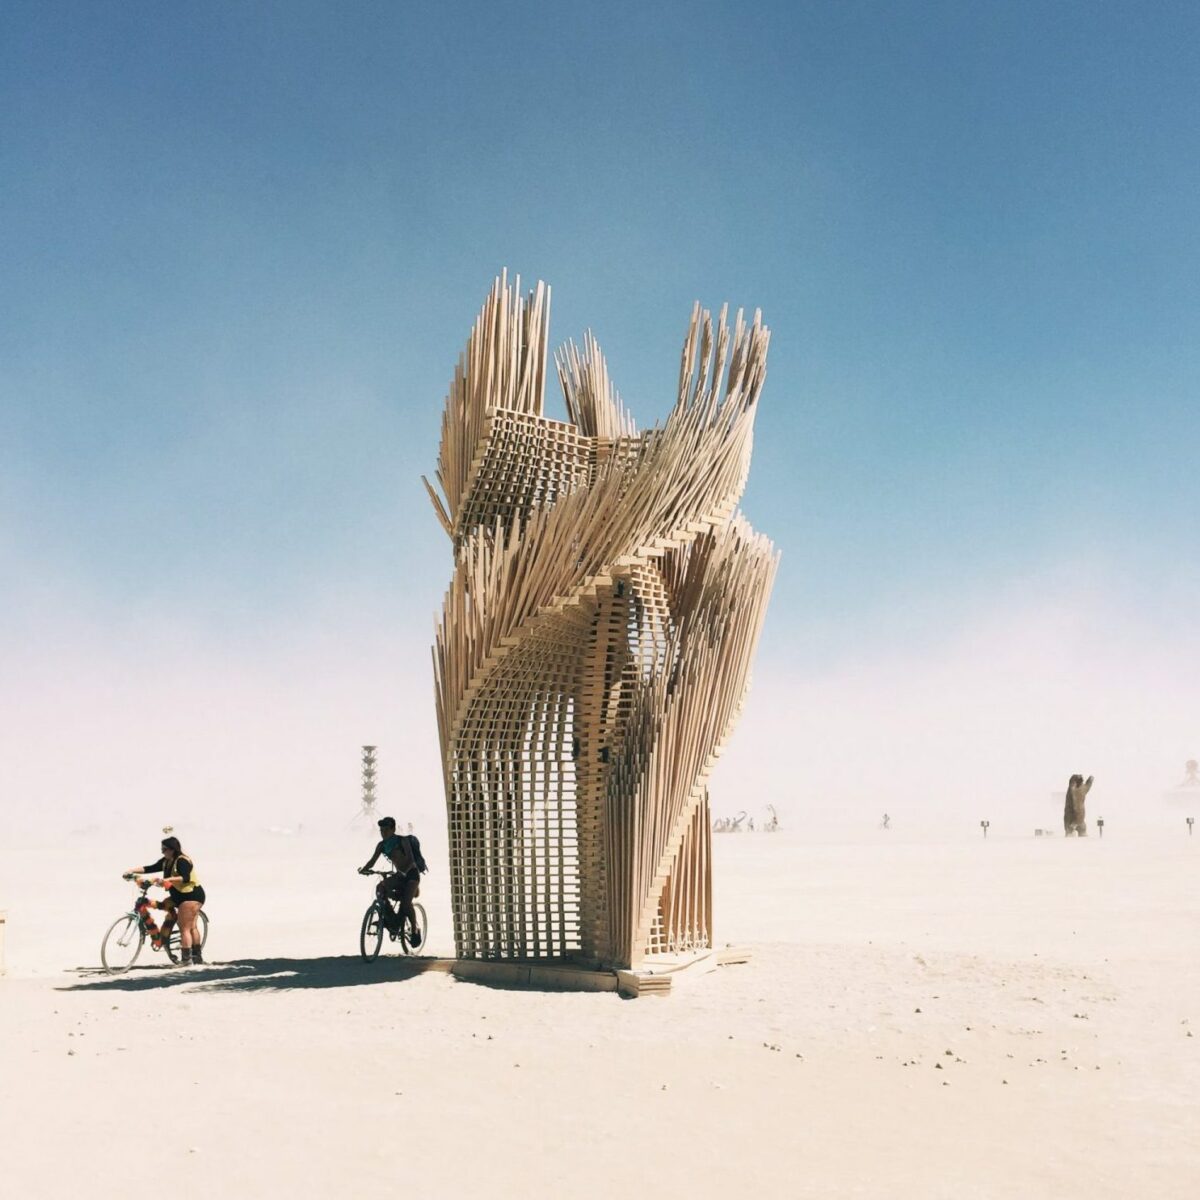 Photograph by PieterJan Mattan for Dezeen - Tangential Dreams at Burning Man 2016 by Arthur Mamou-Mani